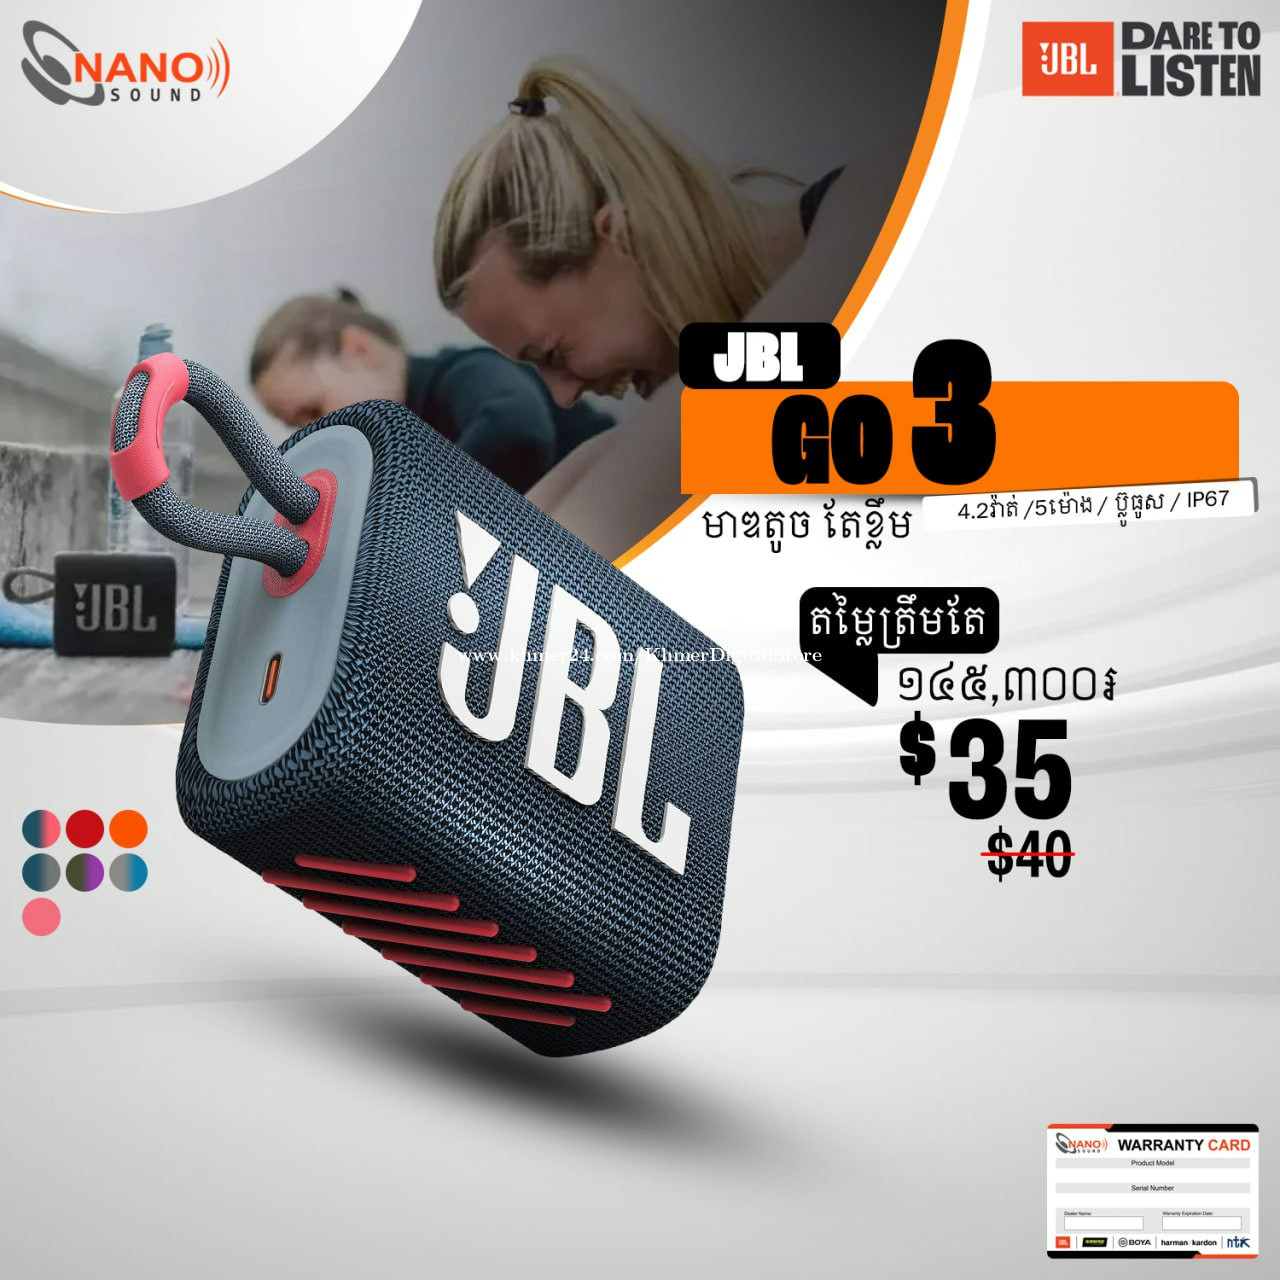 JBL GO 3  Portable Waterproof Speaker Price $40.00 in Voat Phnum